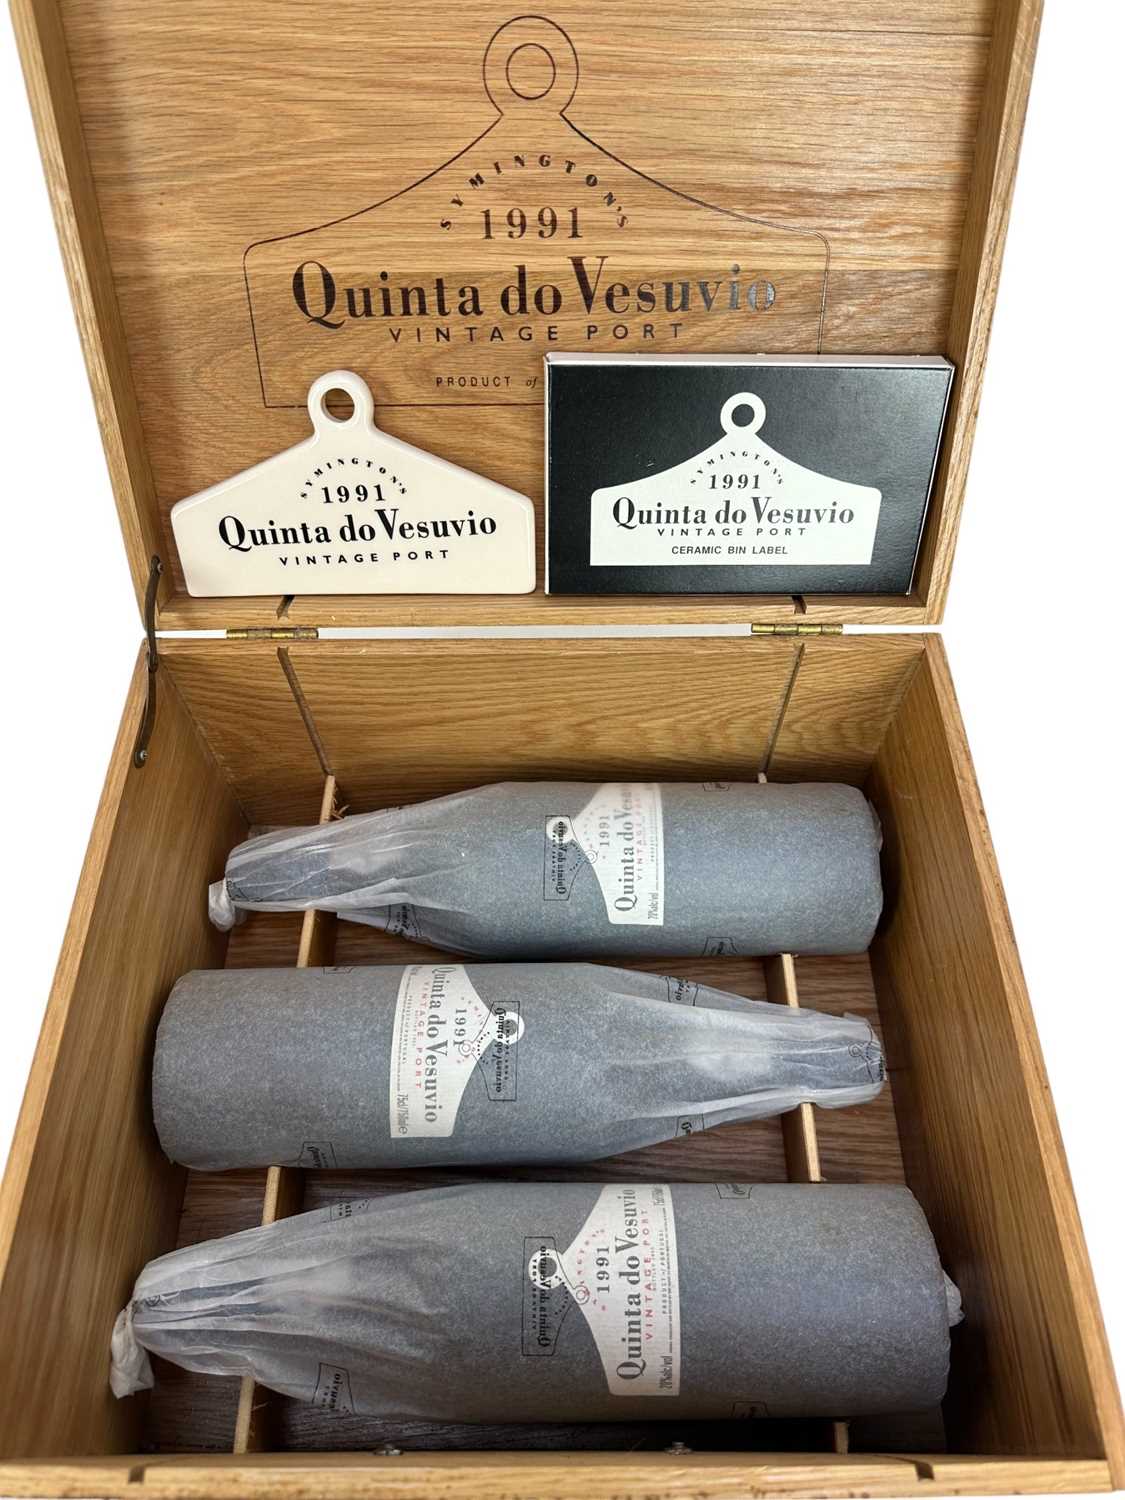 Lot 48 - Port - three bottles, Symington's Quinta do Vesuvio 1991, in 6 bottle wooden case with ceramic bin label